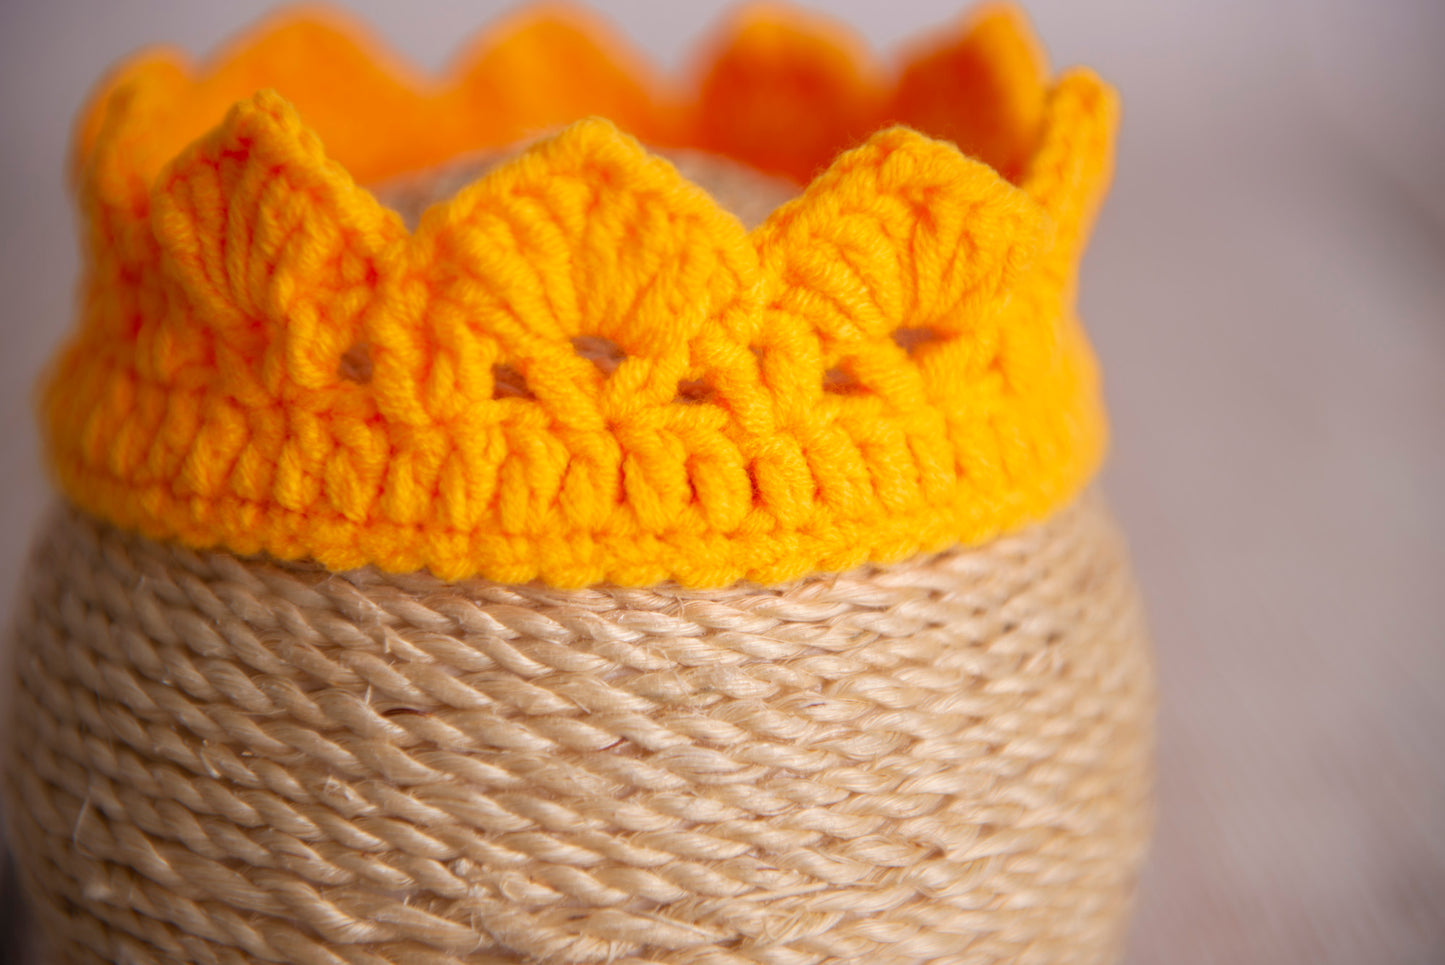 Crochet Crown - Orange